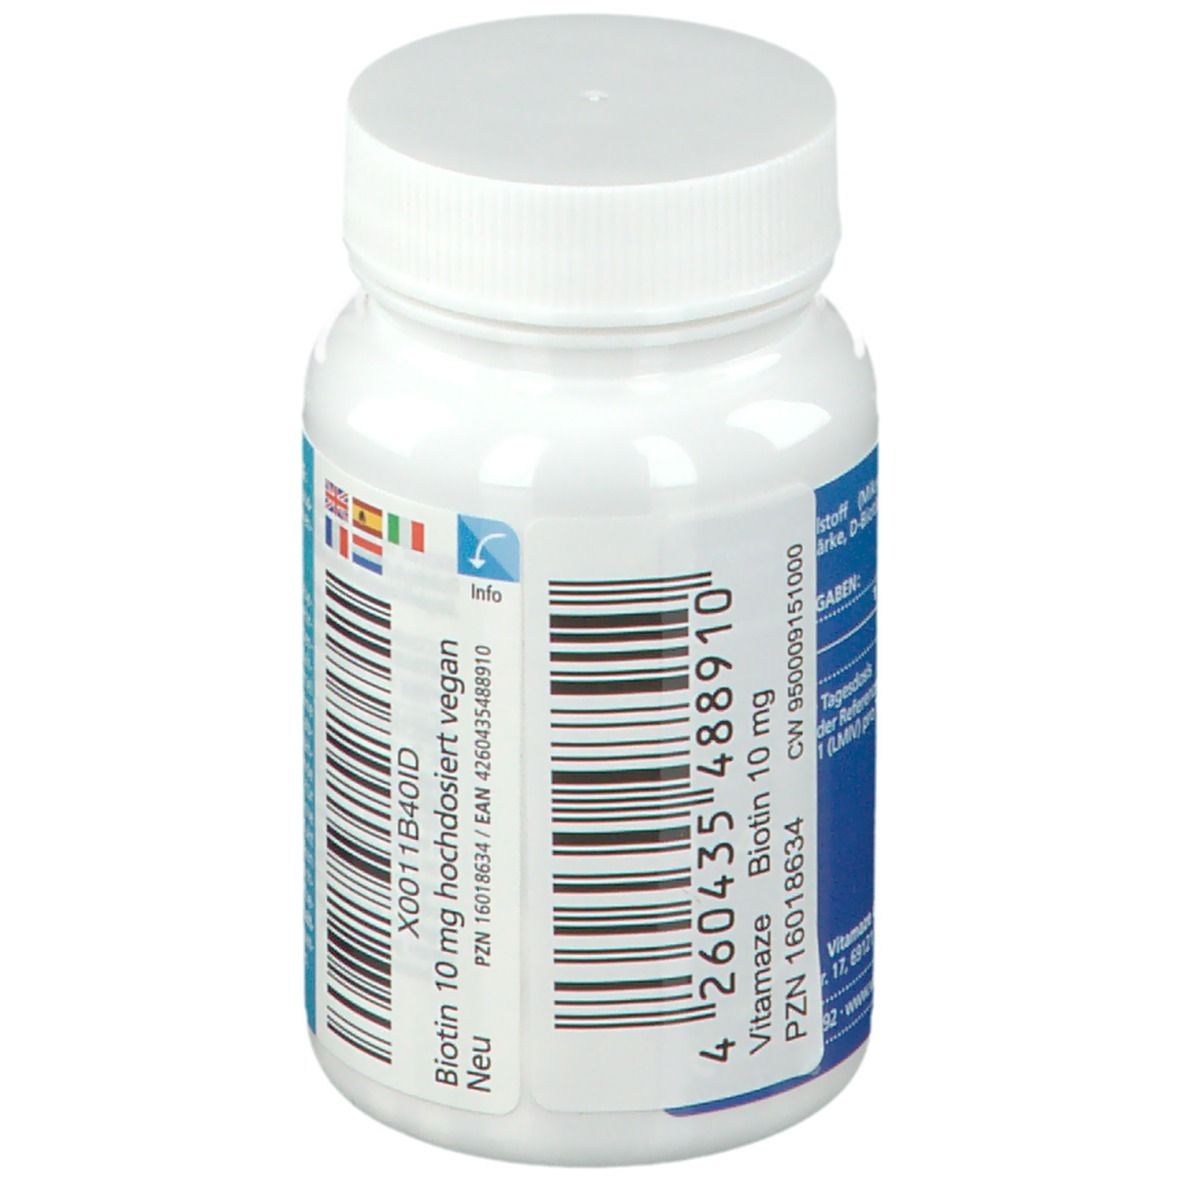 Vitamaze Biotine 10 mg dose forte